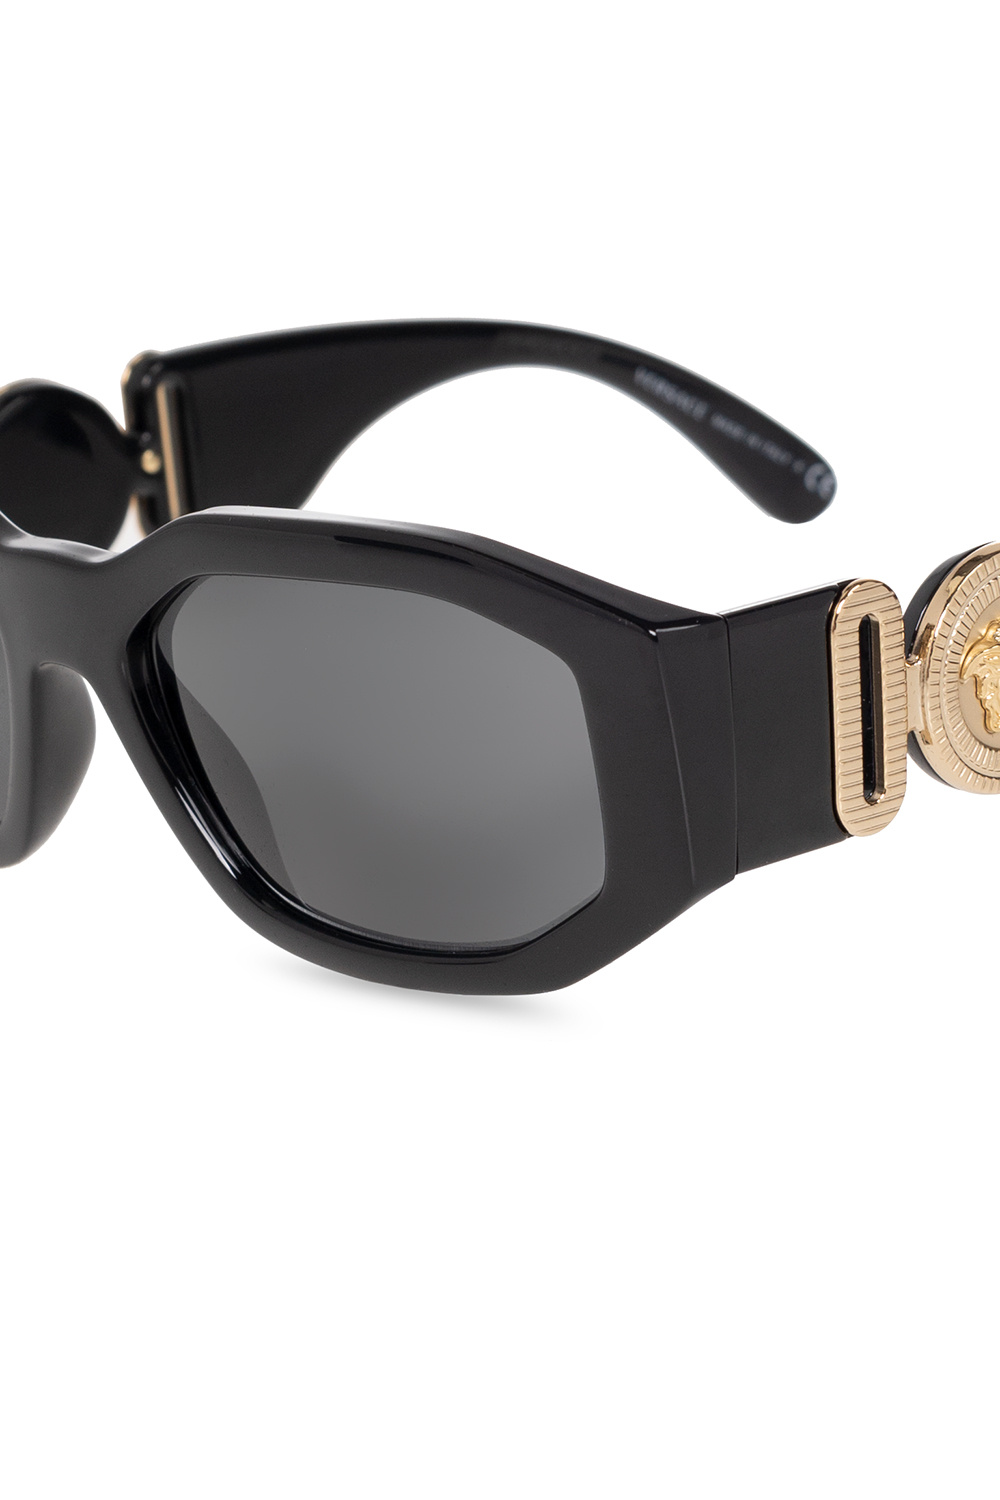 Versace cubitts herbrand sunglasses cb herb blk